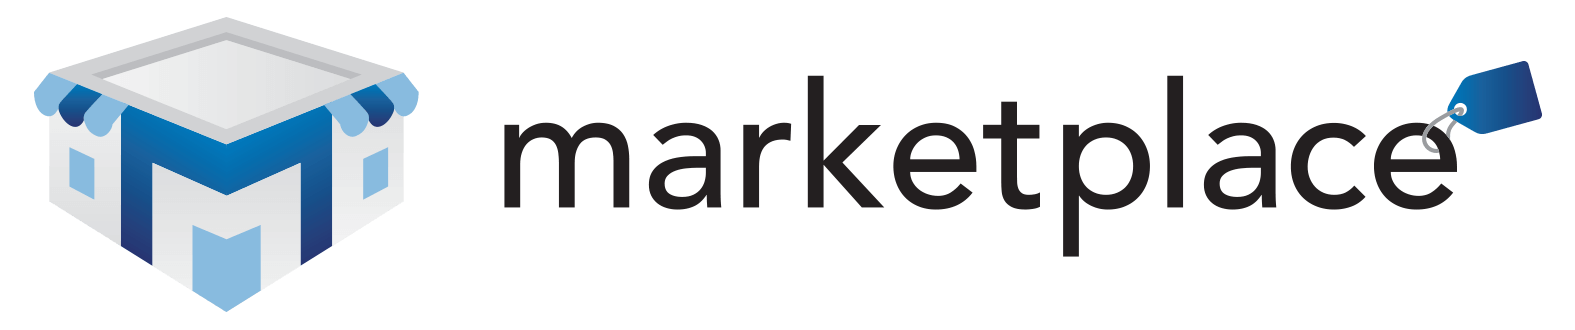 Marketplace Logo - Vionic Brand Assets